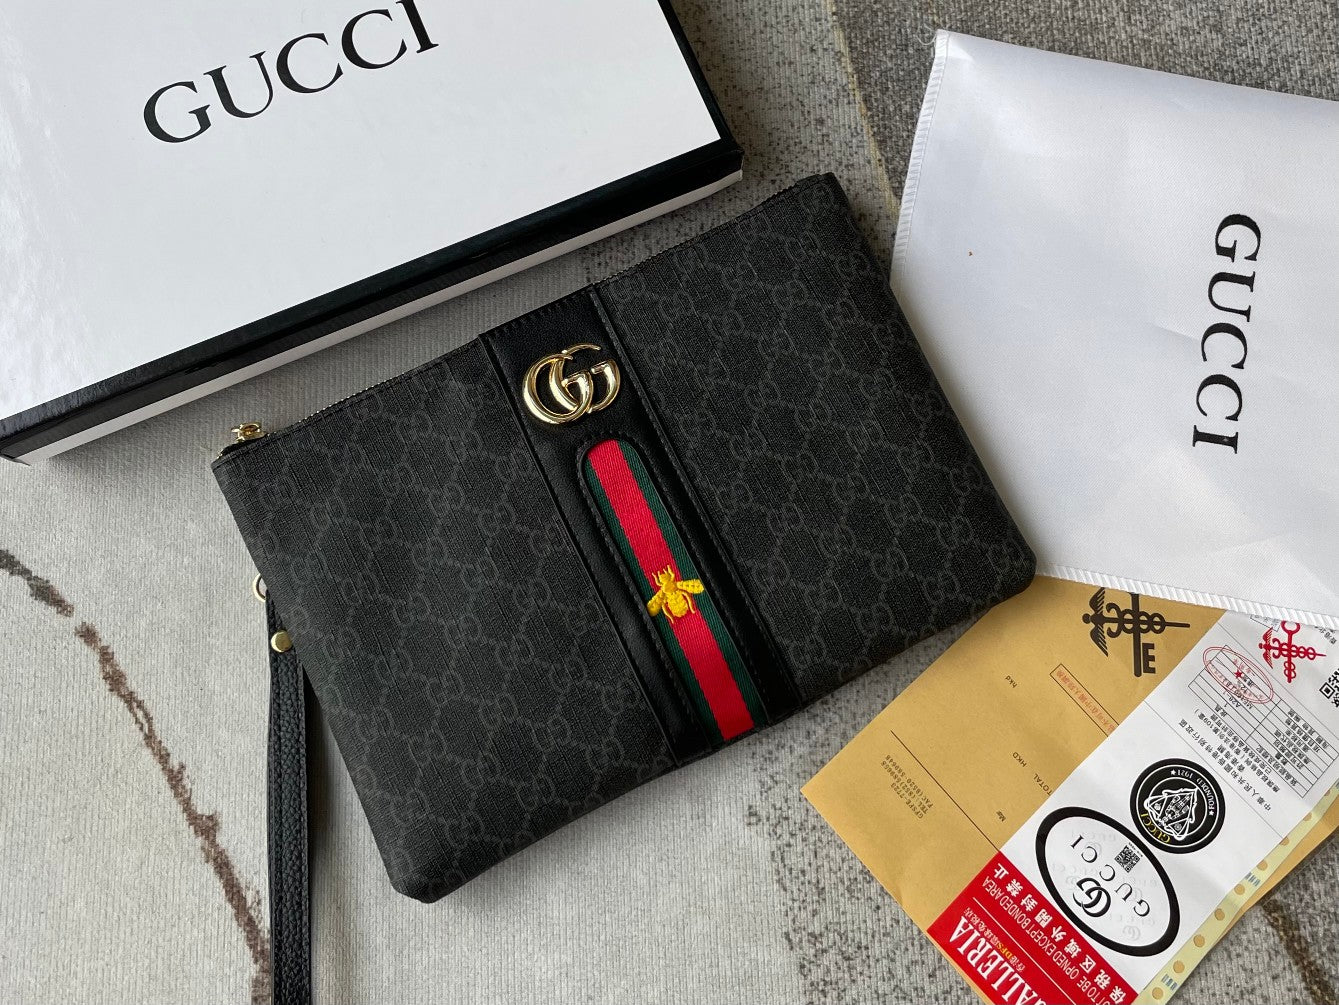 Gucci Handbags (wristlet)